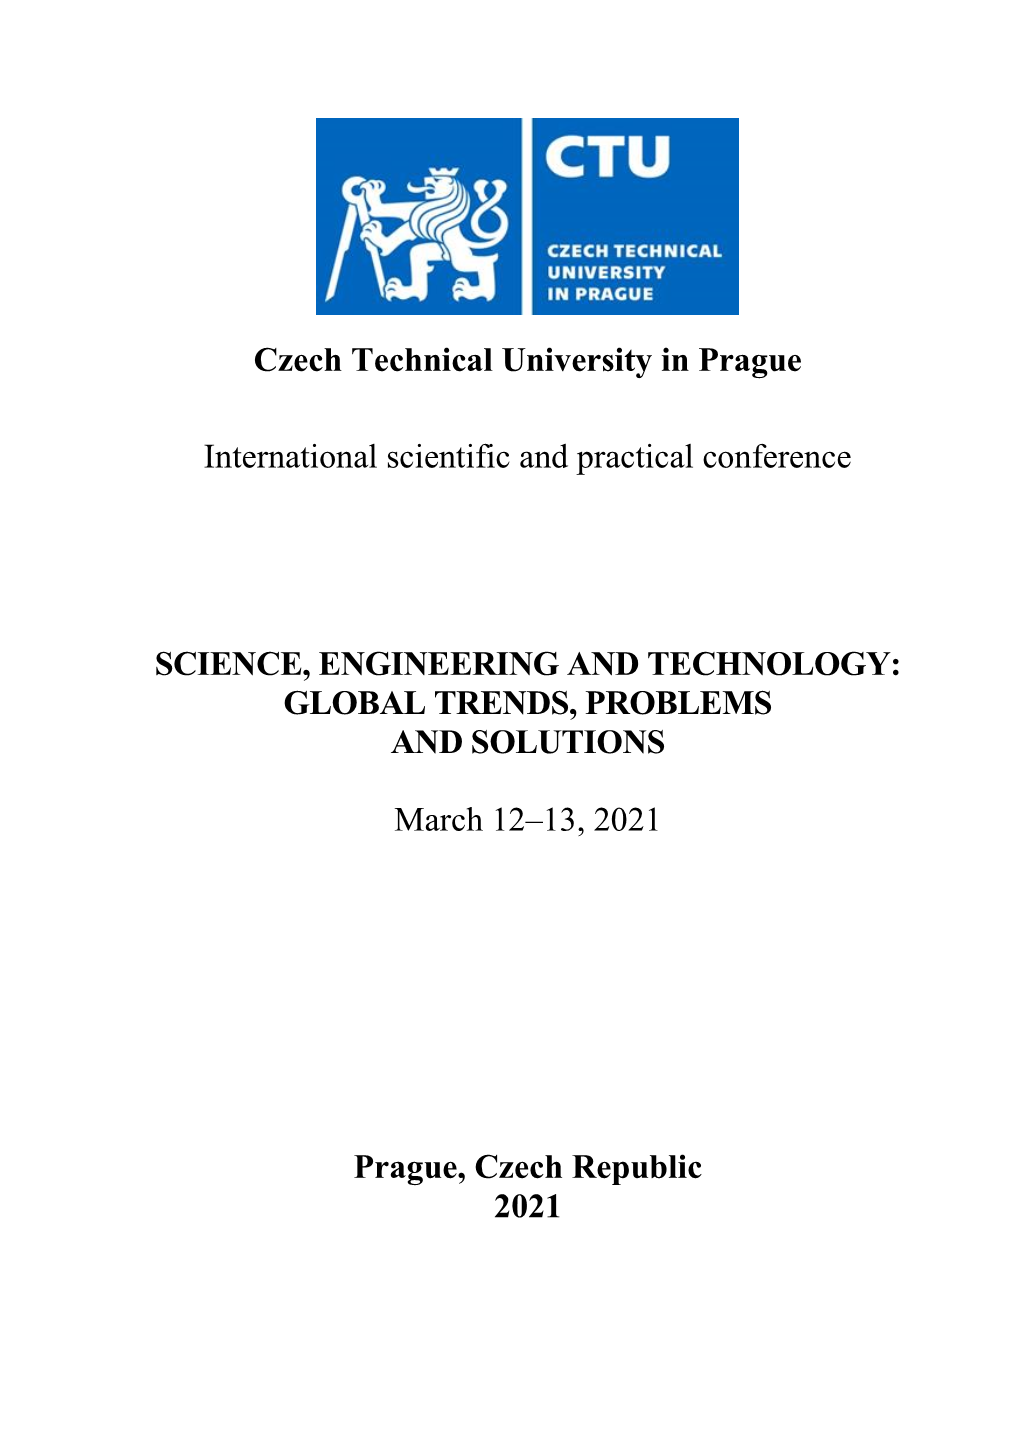 Czech Technical University in Prague International Scientific and Practical